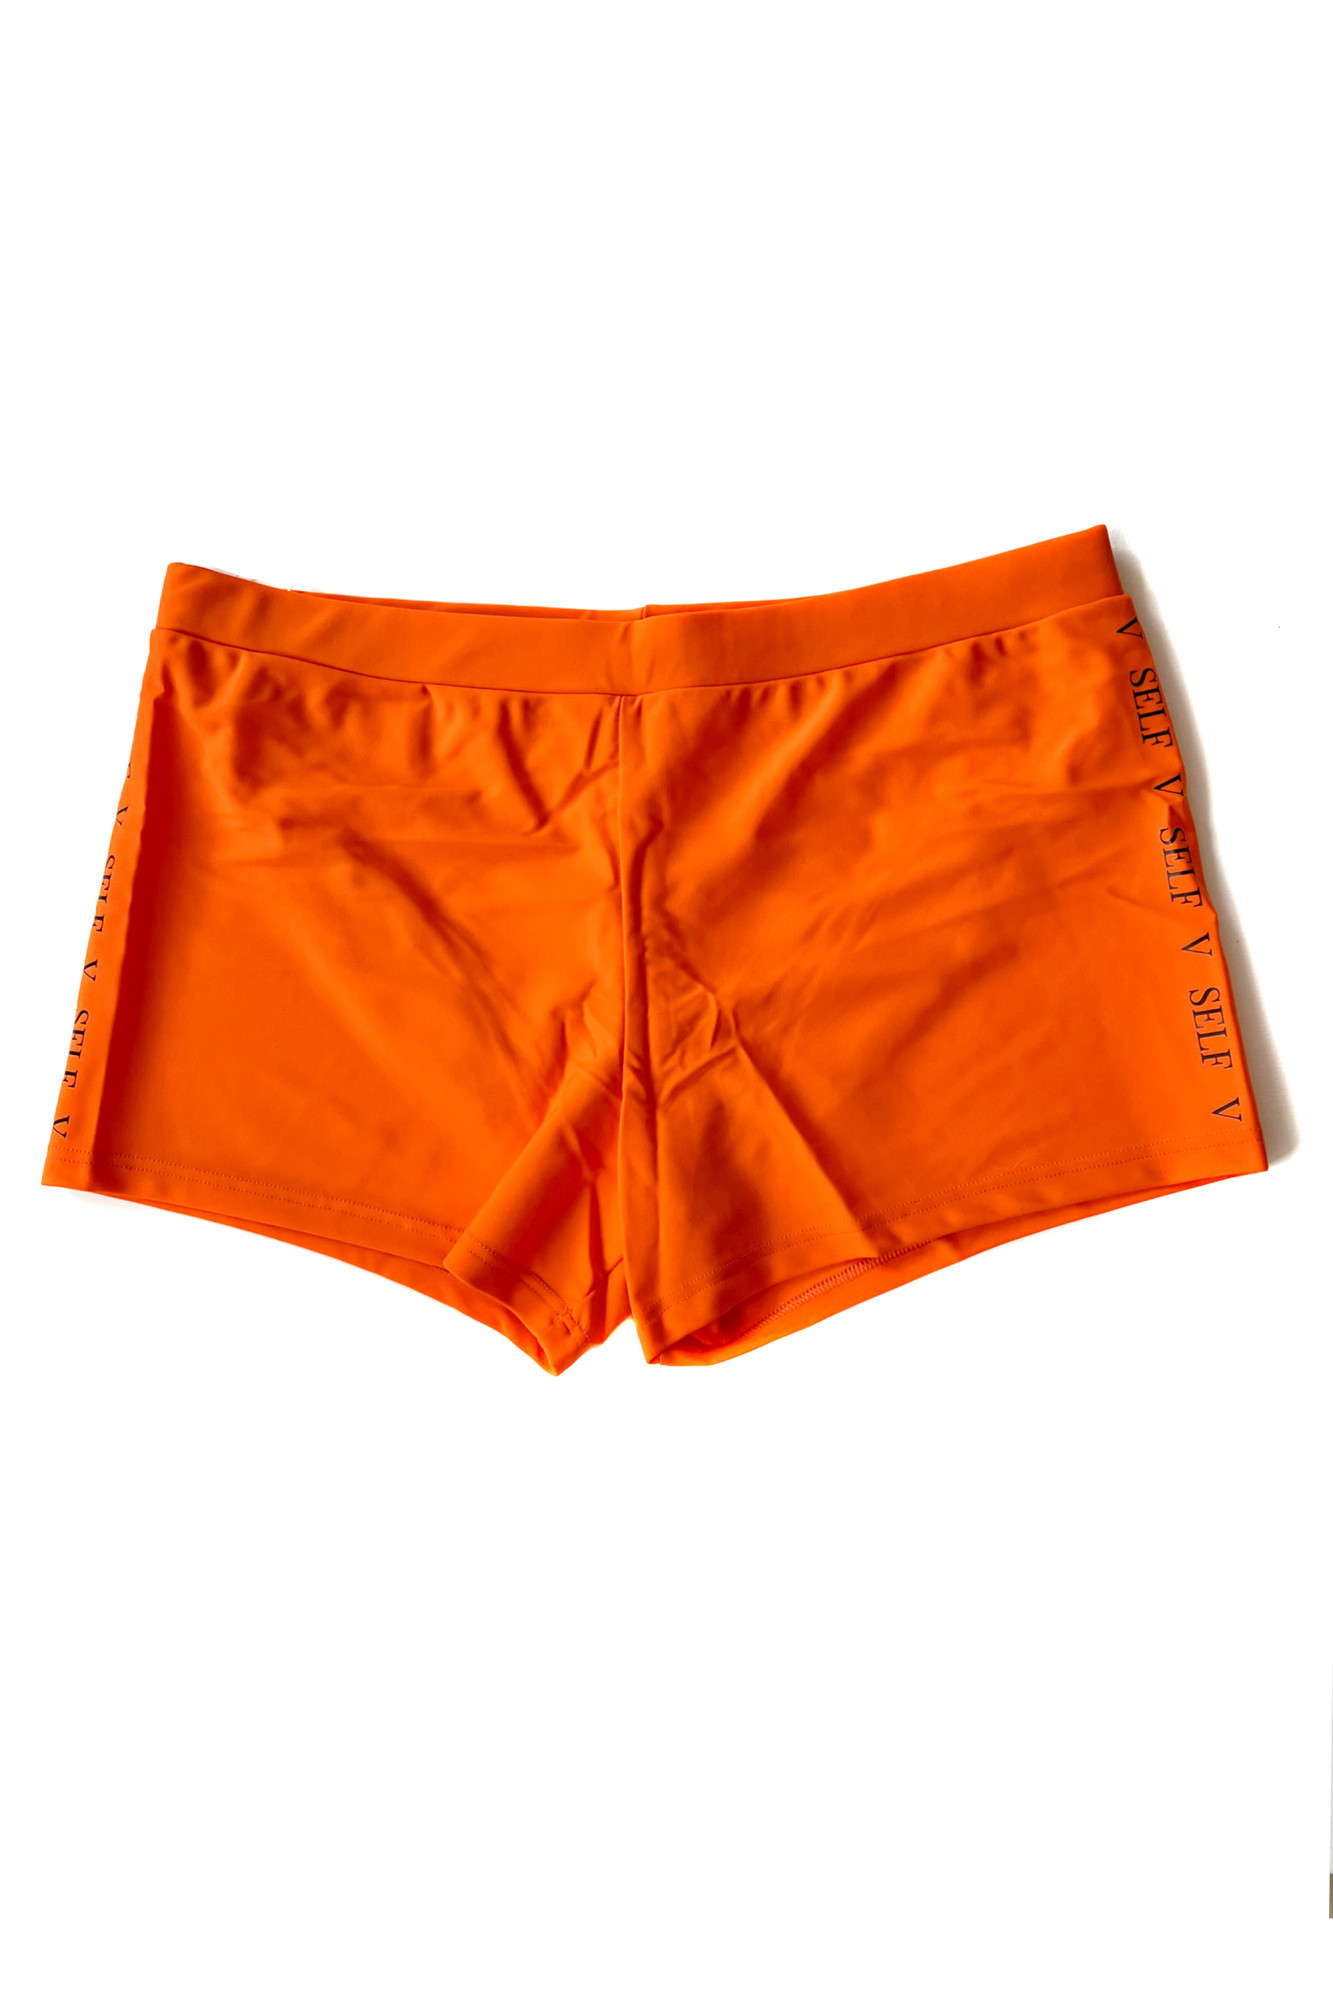 Pánské plavky S96D-5a oranžové - Self XL